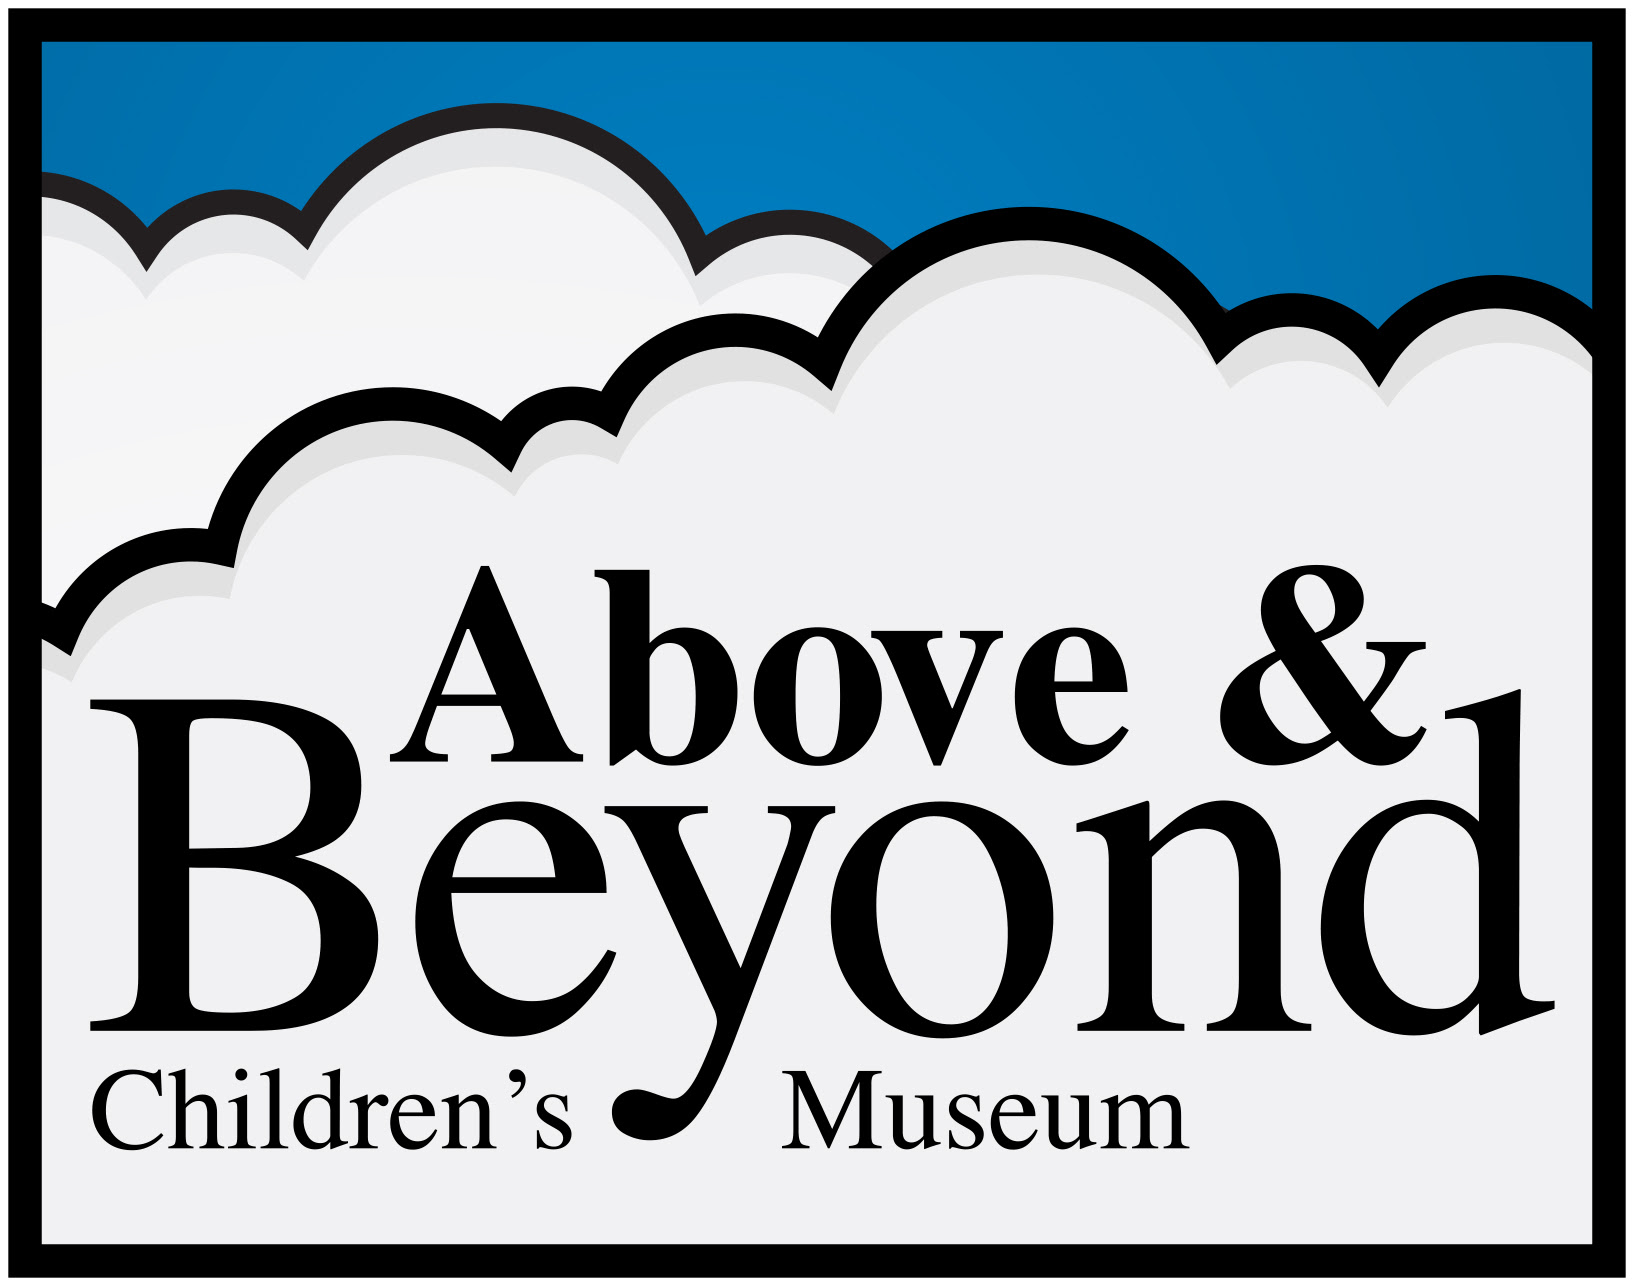 Above & Beyond Children's Museum